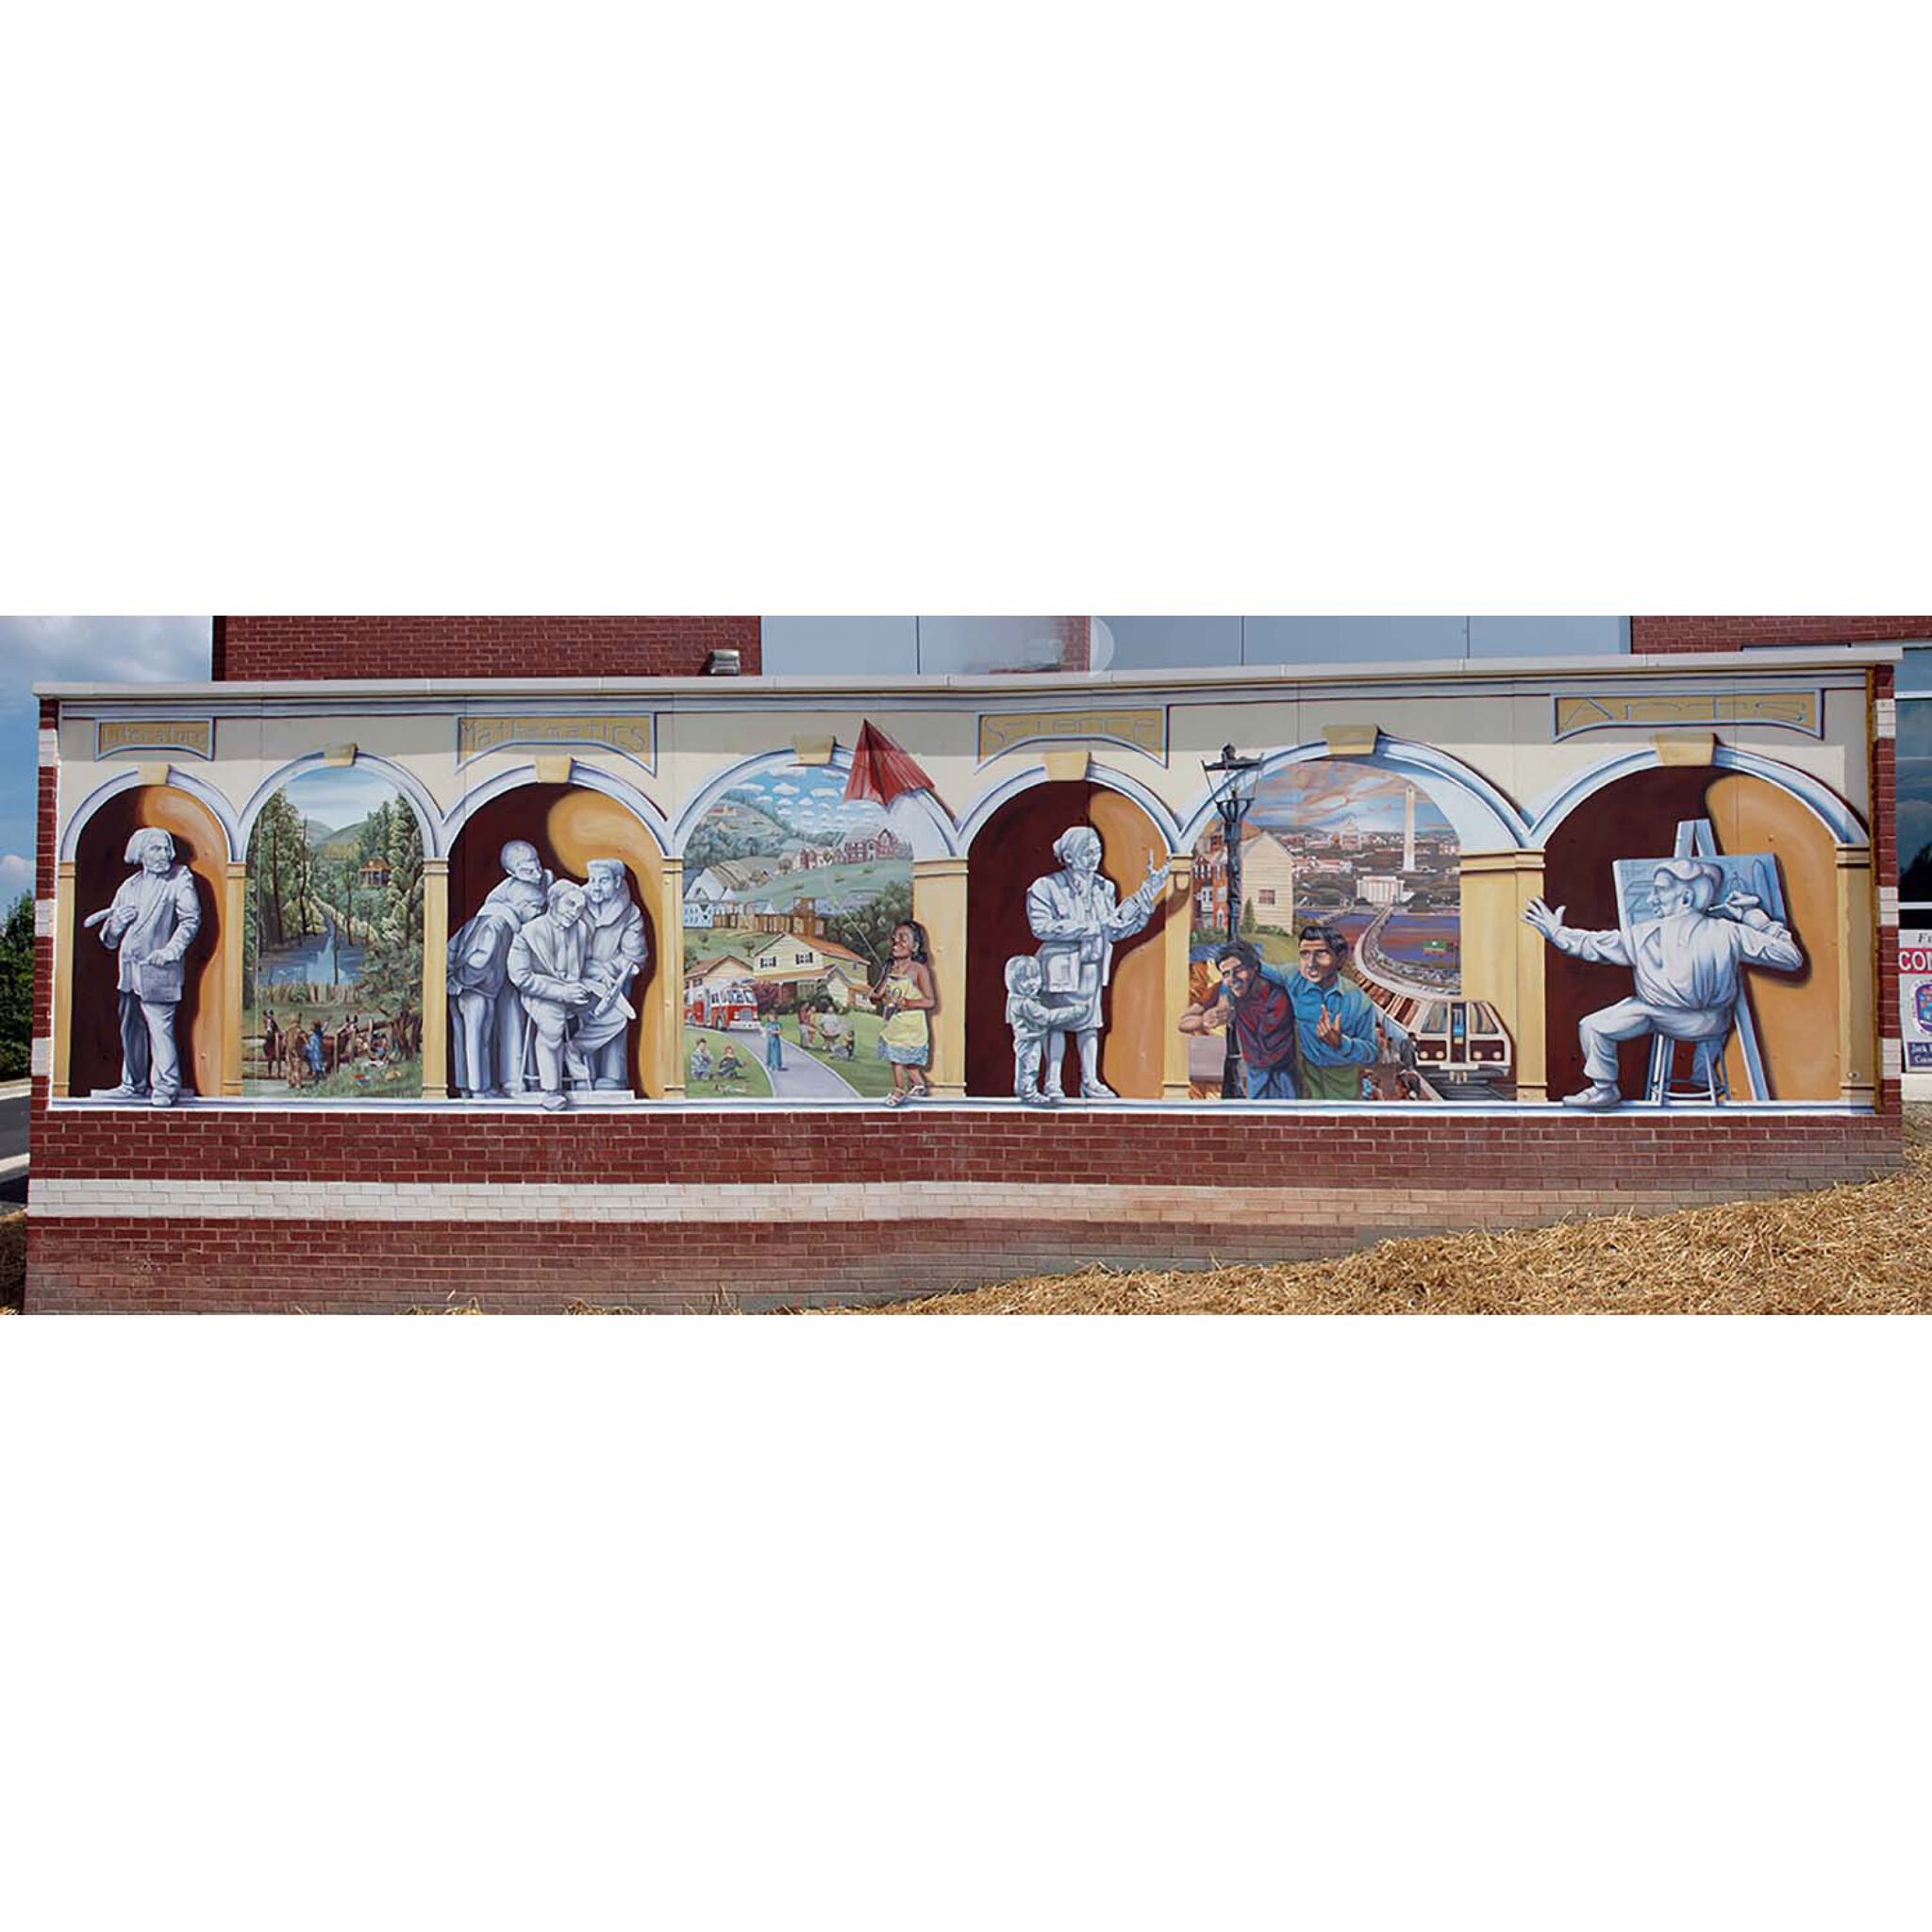 Murals of Baltimore&mdash;Paradise